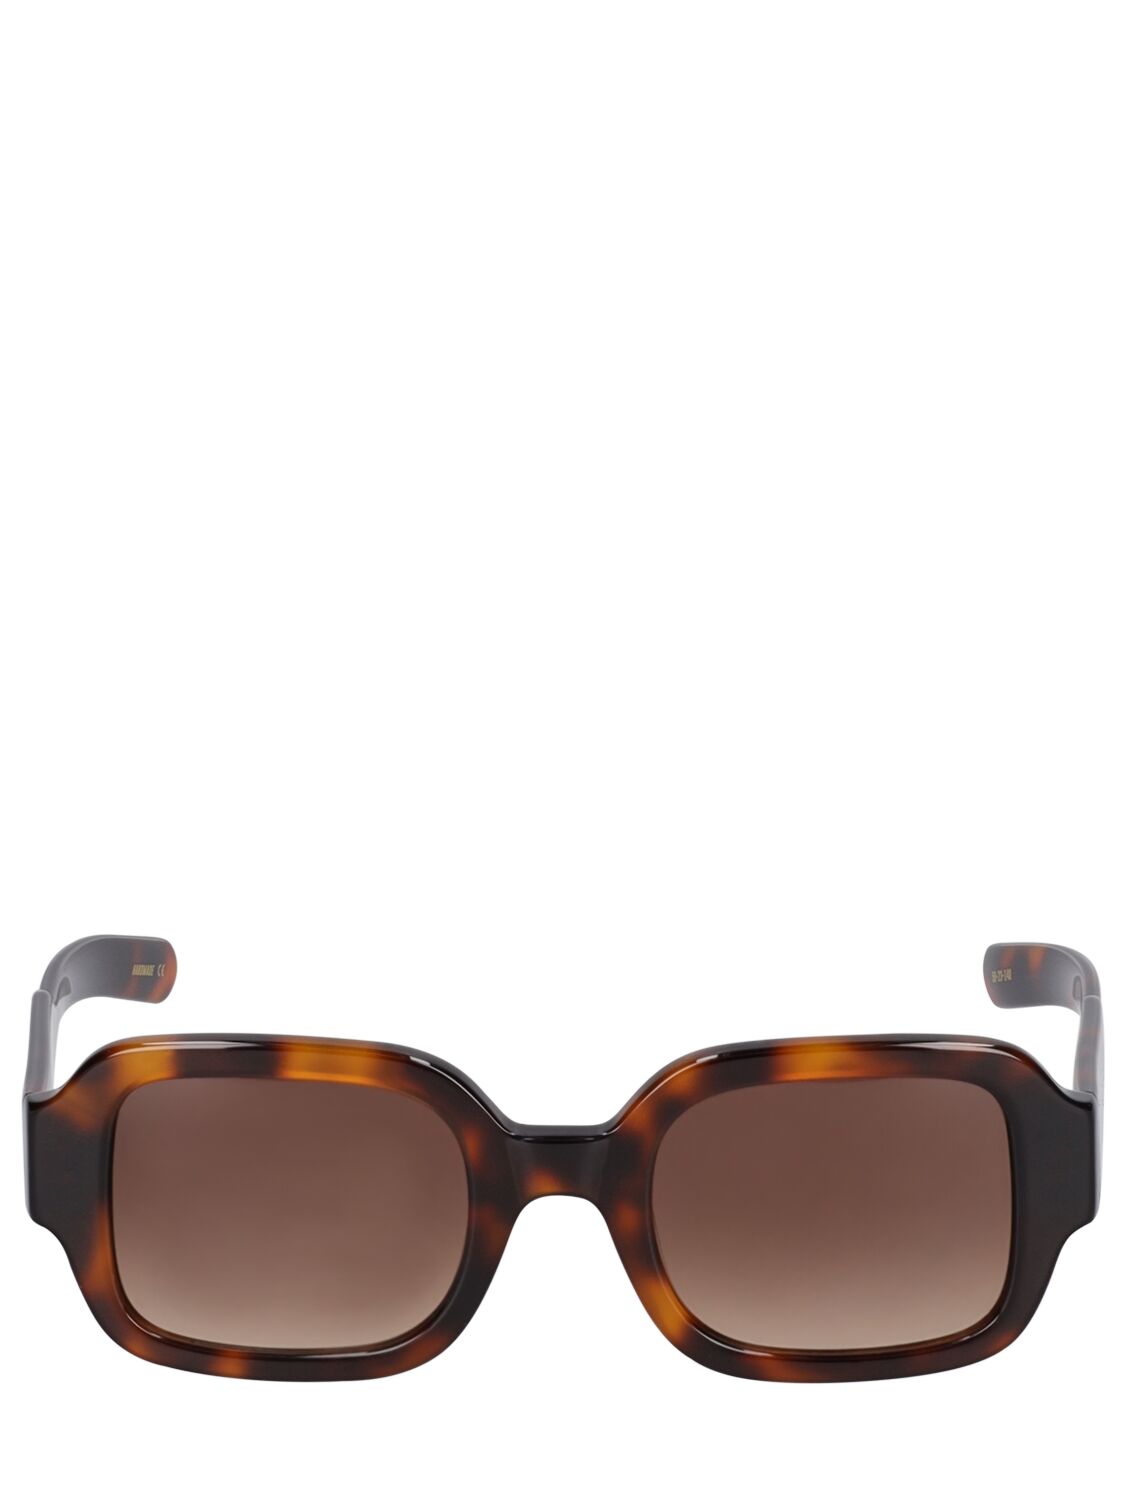 Flatlist Eyewear Tishkoff Sunglasses In Brown